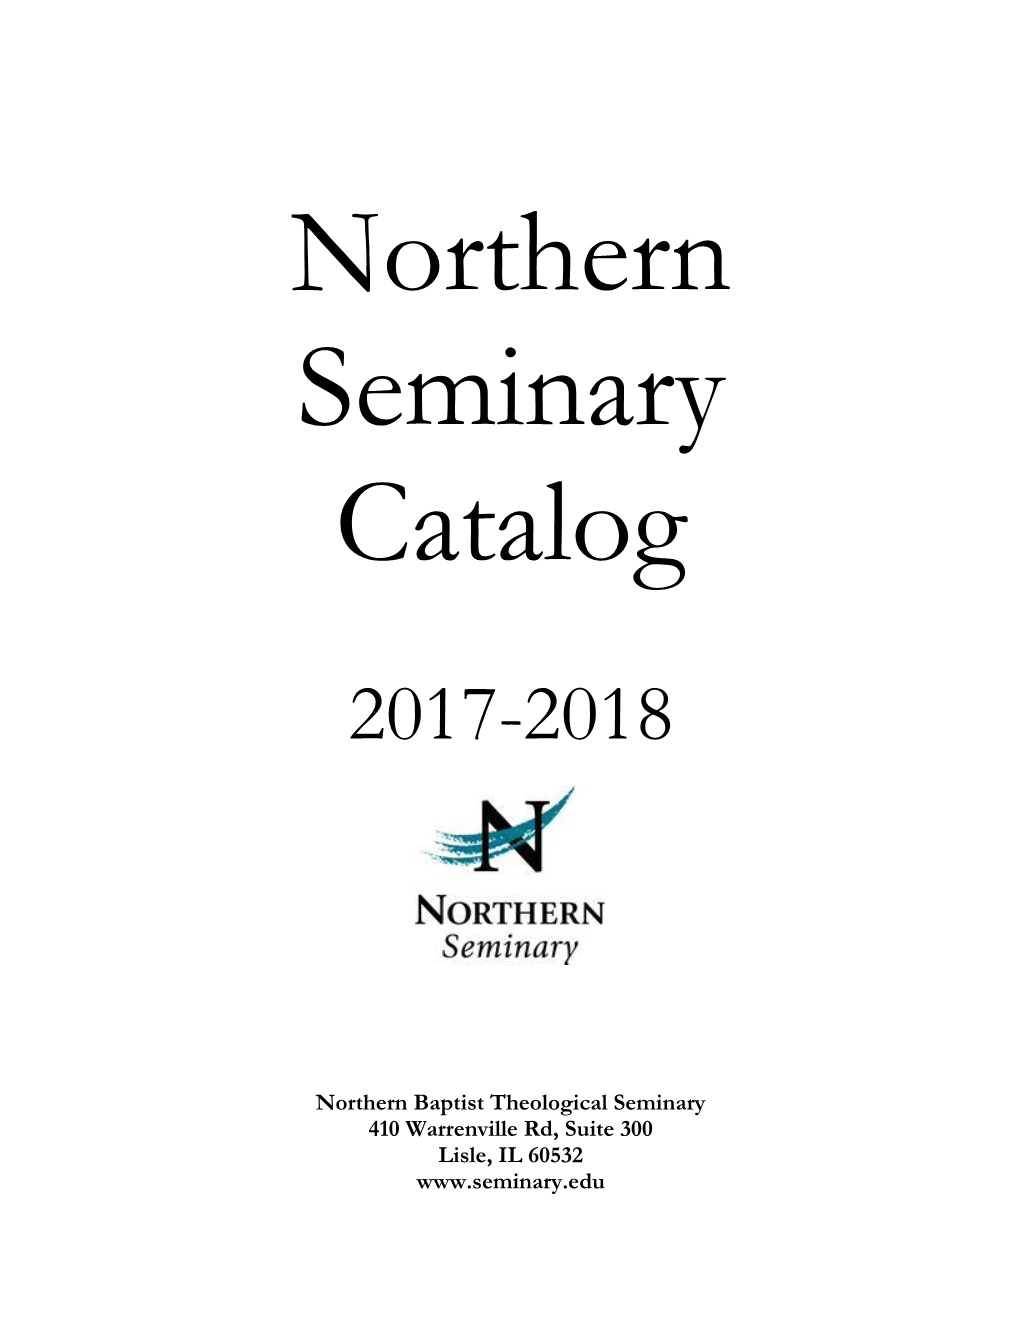 Northern Seminary Catalog